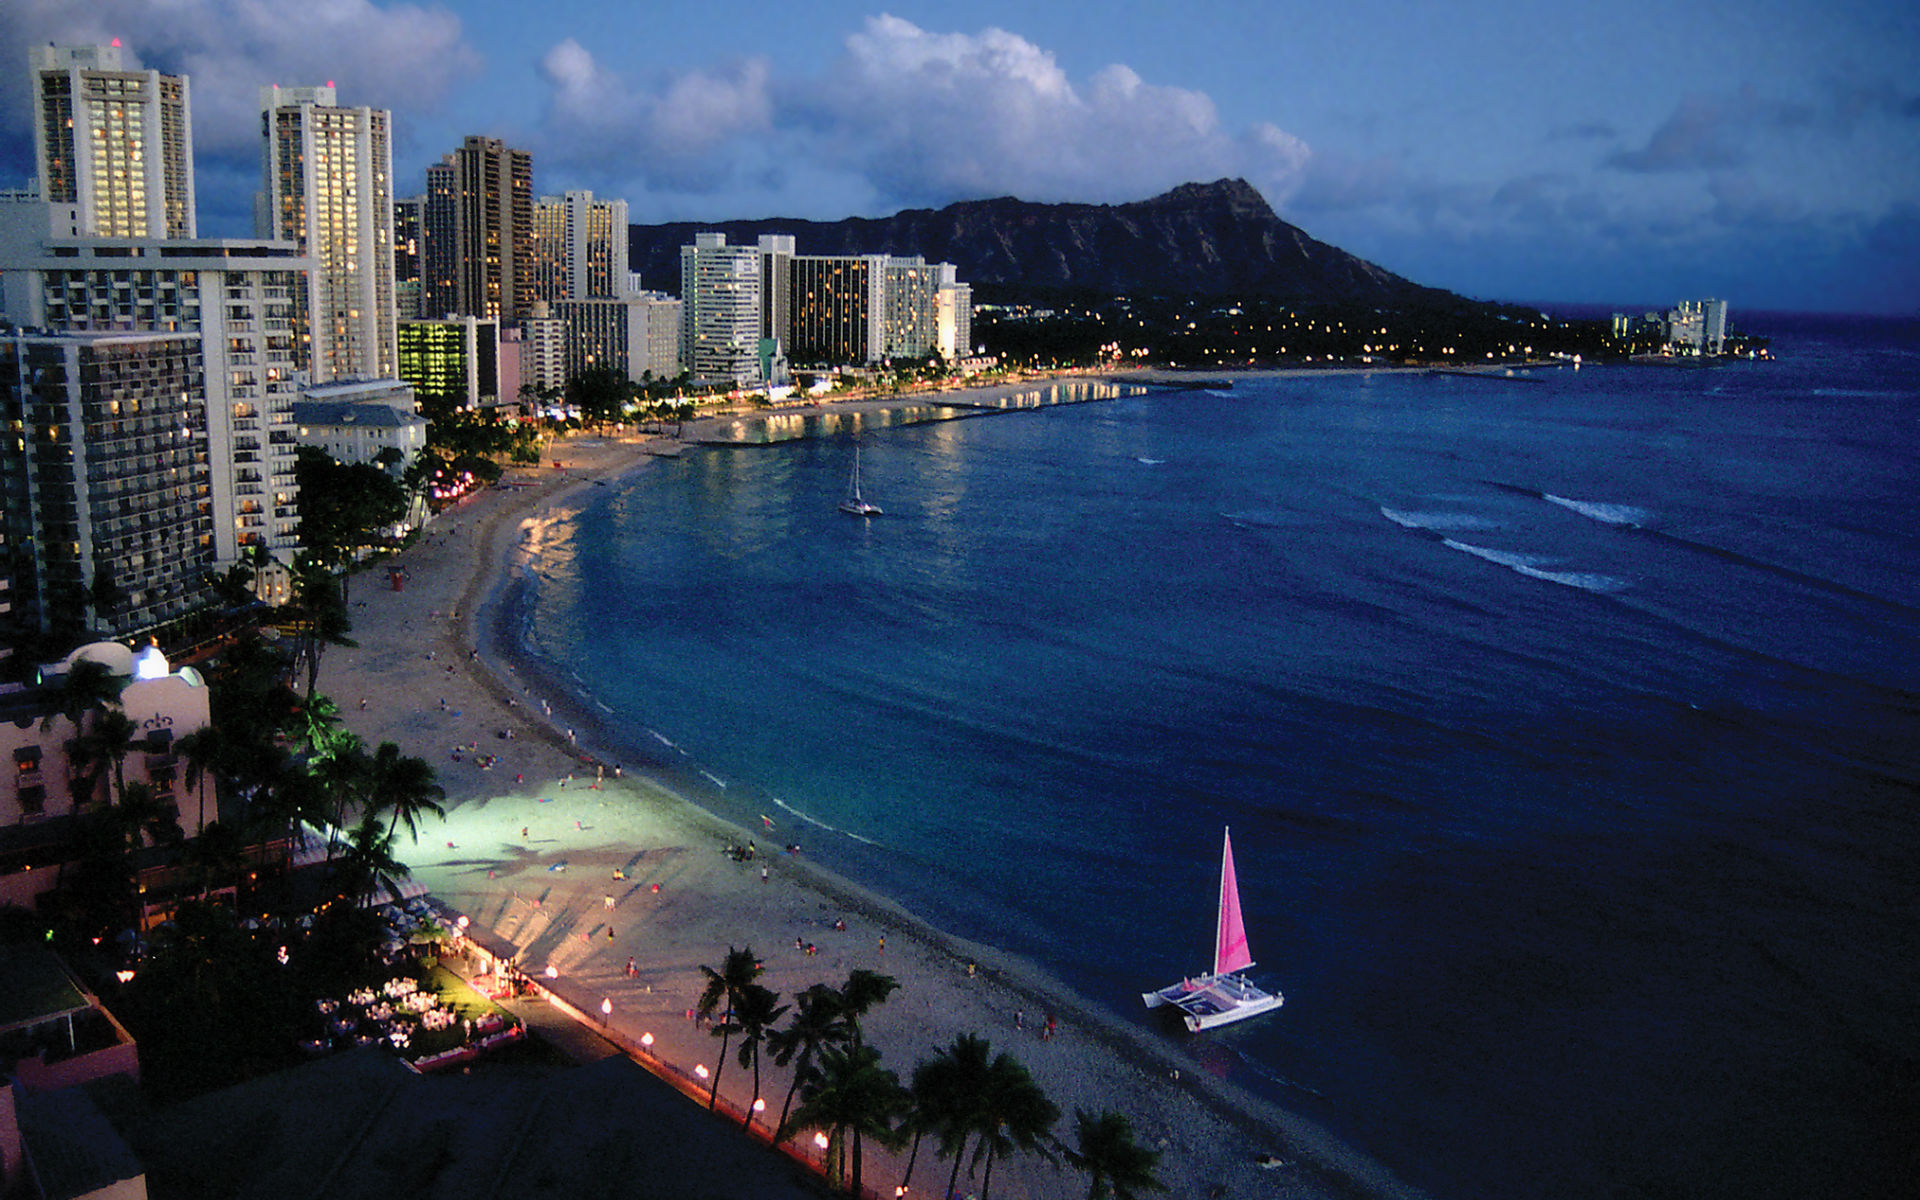 Evening scenery of Waikiki - 1920x1200